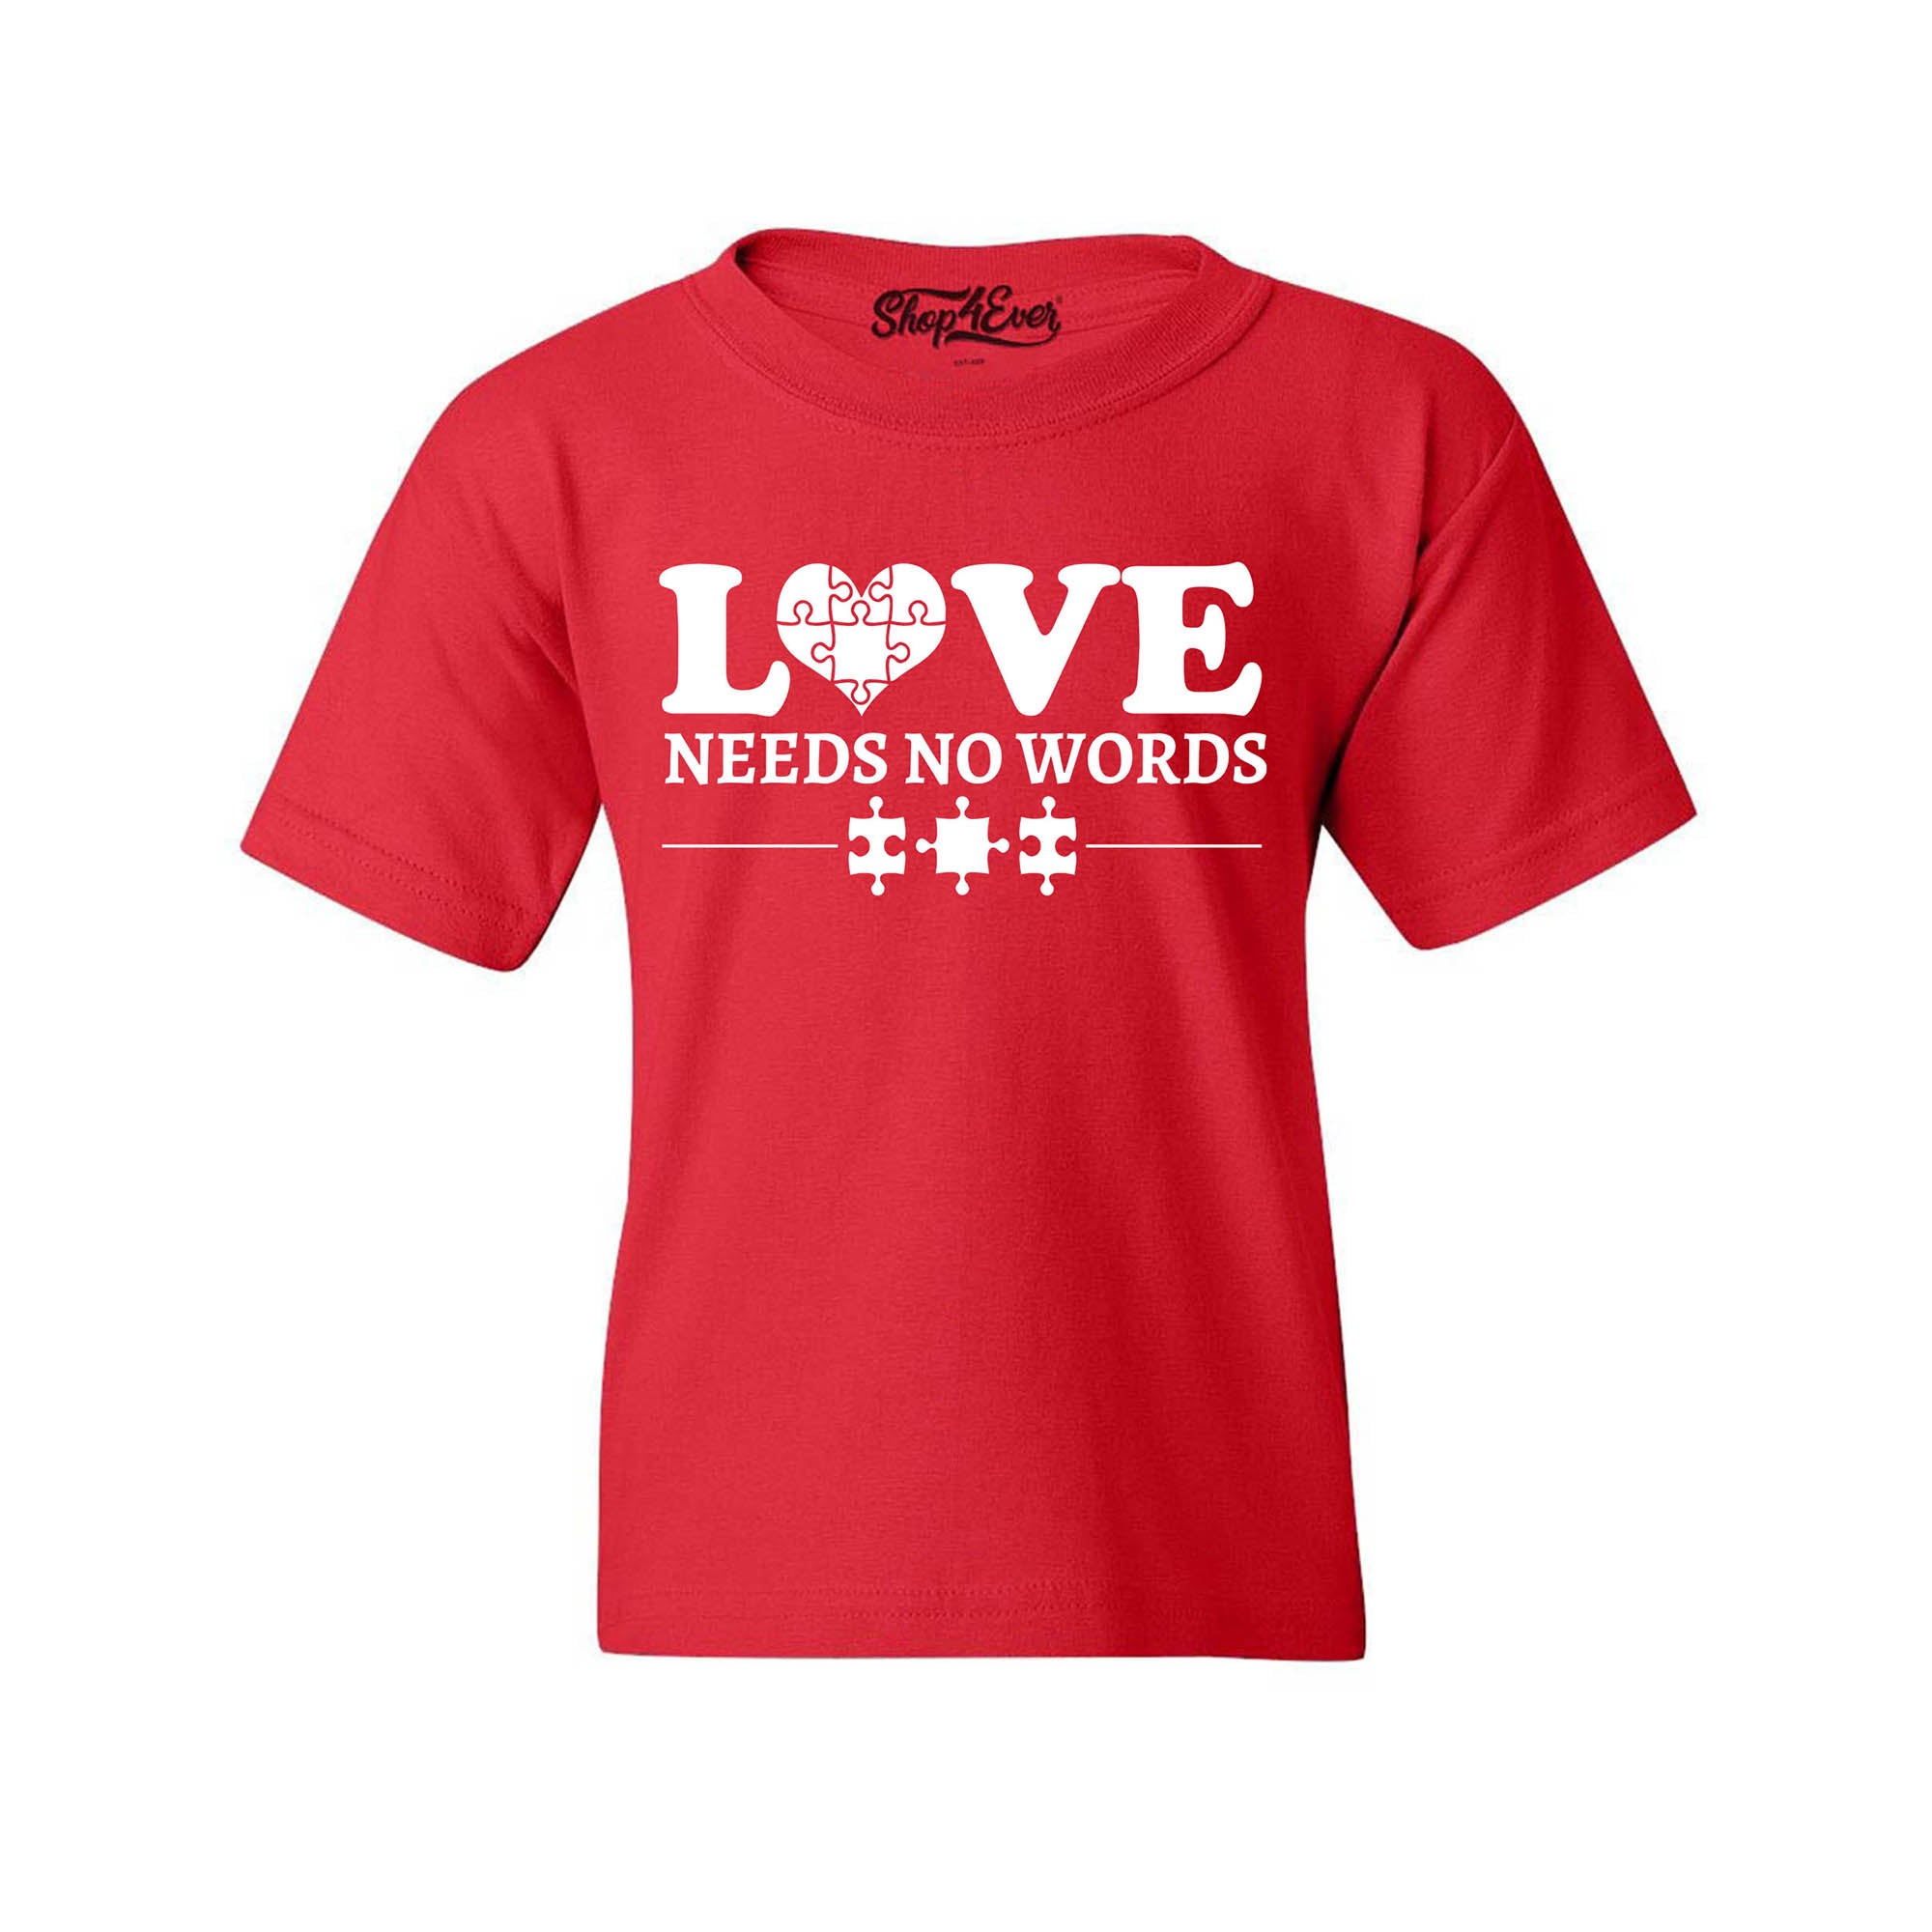 Love Needs No Words Autism Awareness Child's T-Shirt Kids Tee